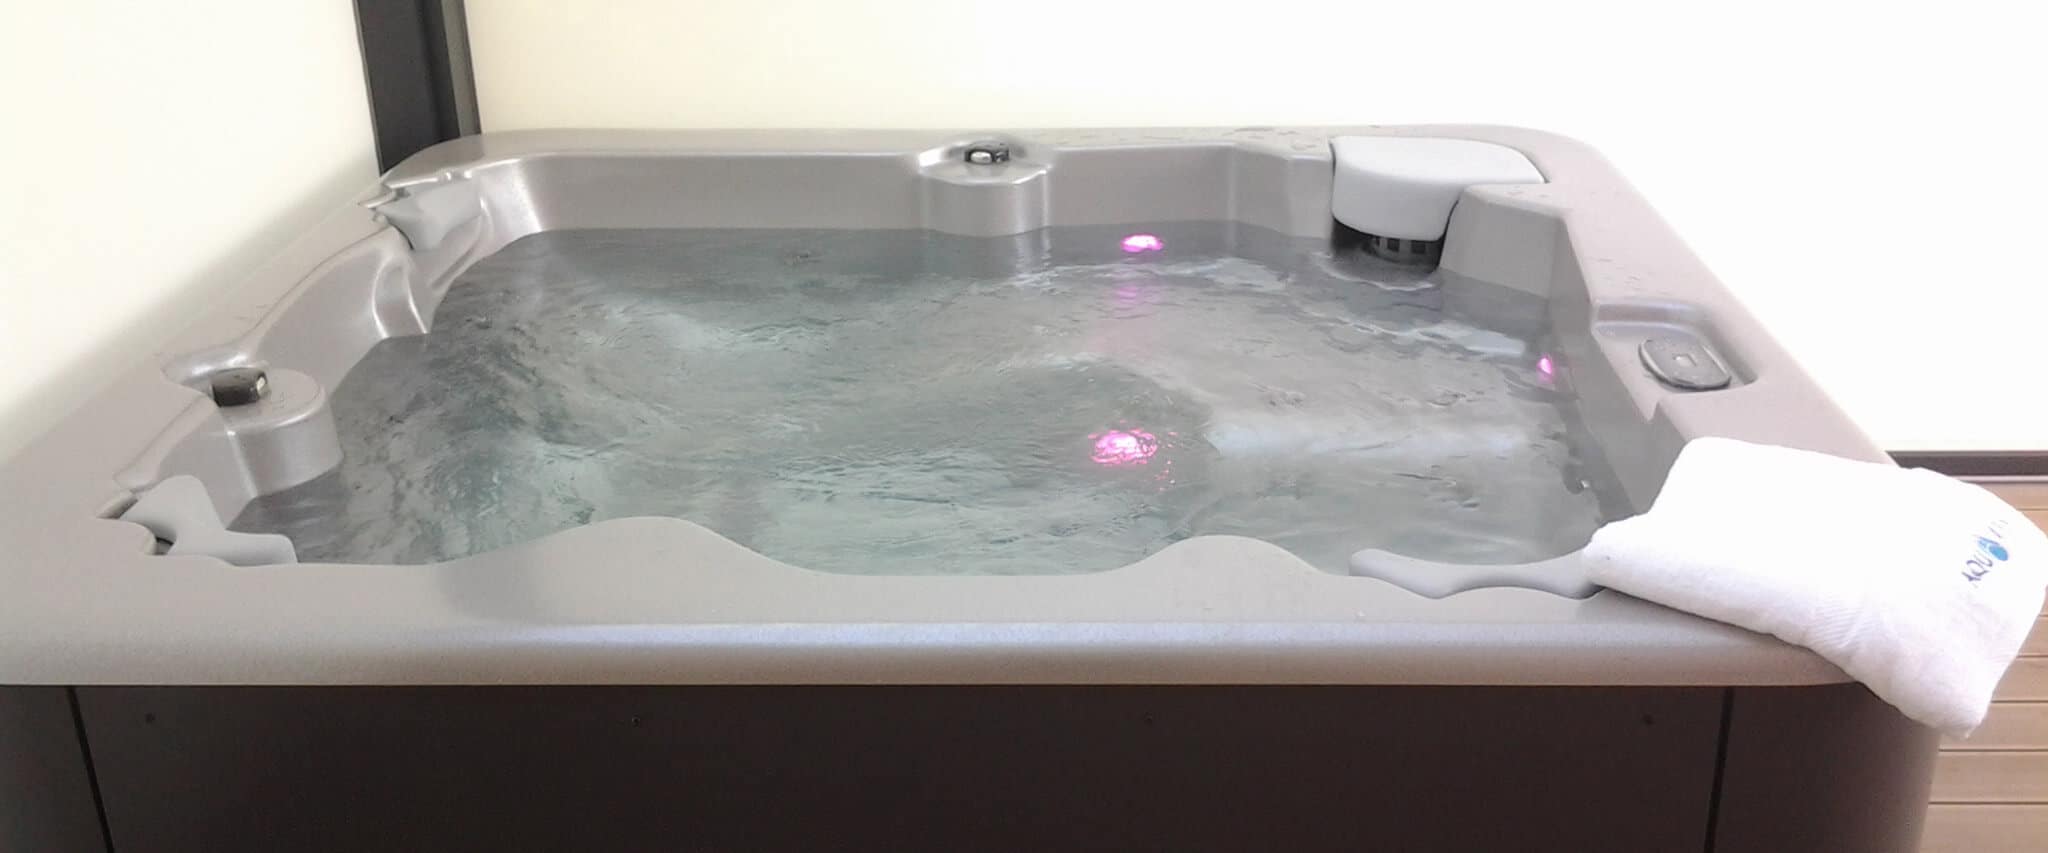 Buy The Easy Access Hot Tub Aqualife 5 Aquavia Spa